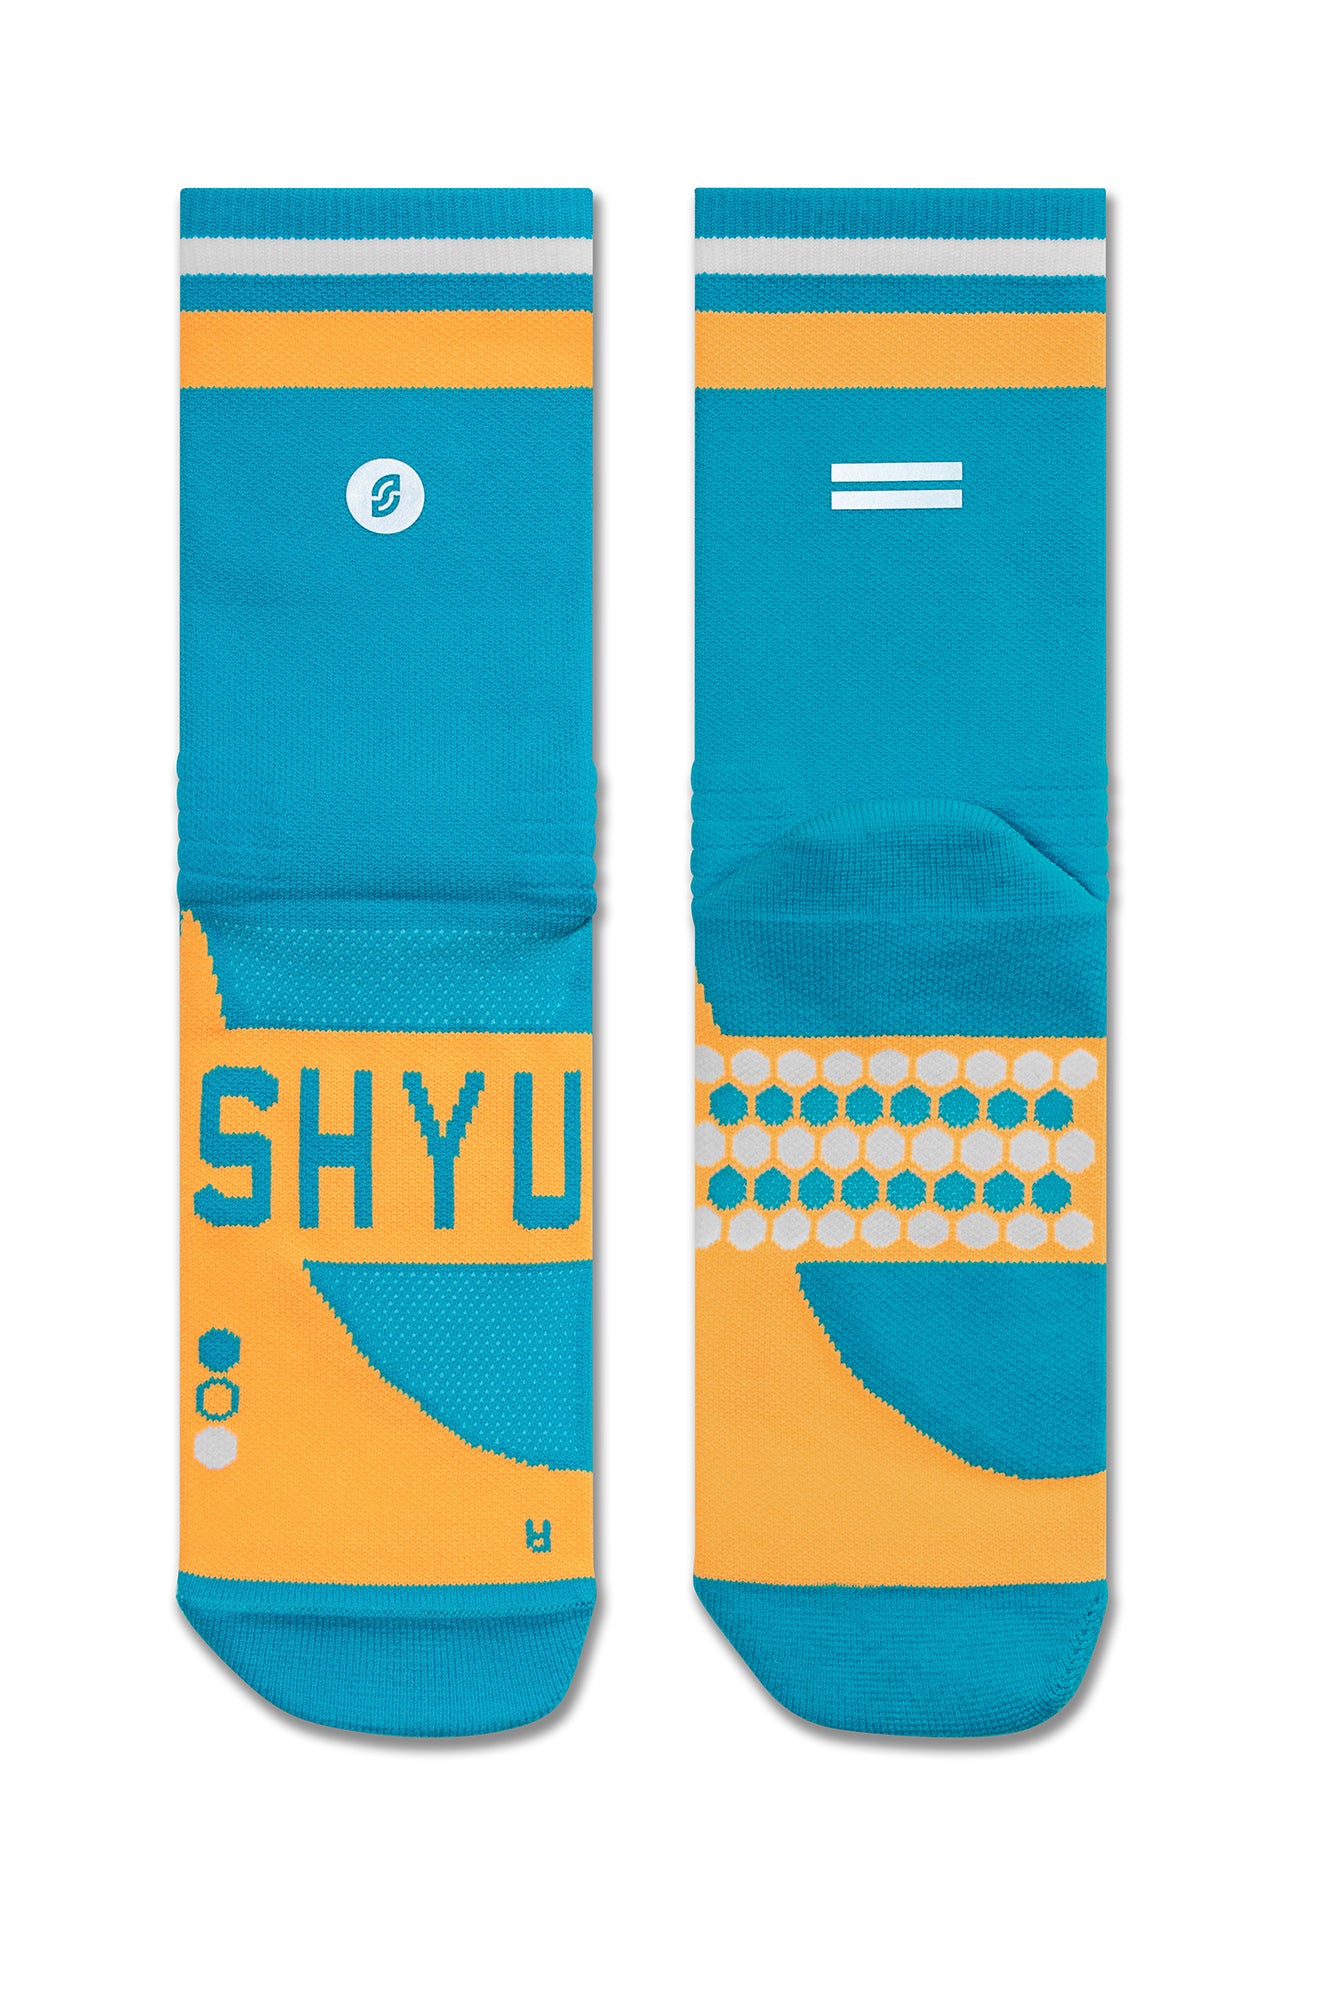 SHYU racing socks - blue | orange | white